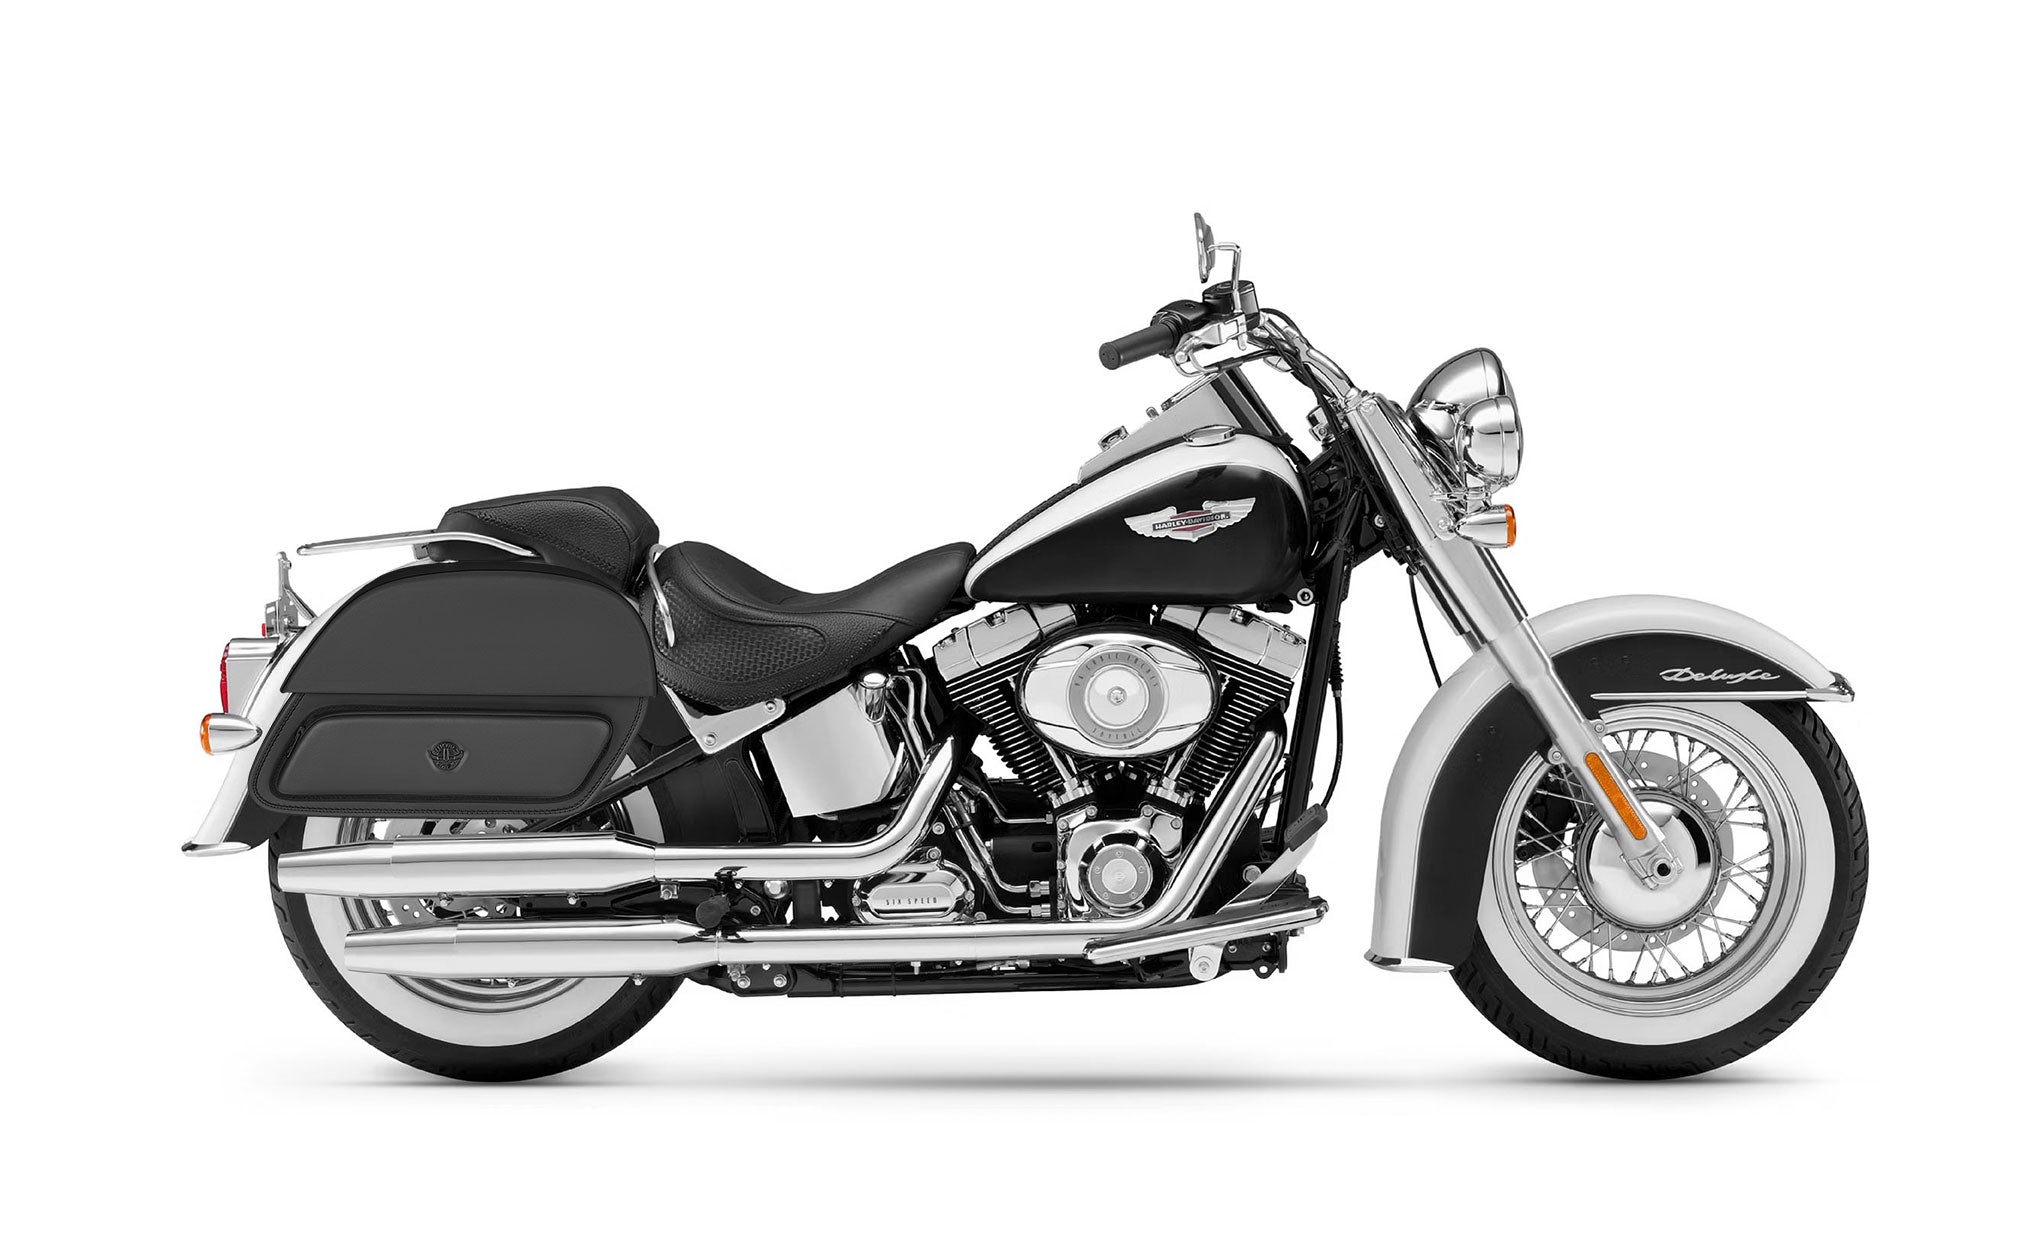 28L - Pantheon Medium Motorcycle Saddlebags for Harley Softail Deluxe FLSTNI on Bike Photo @expand